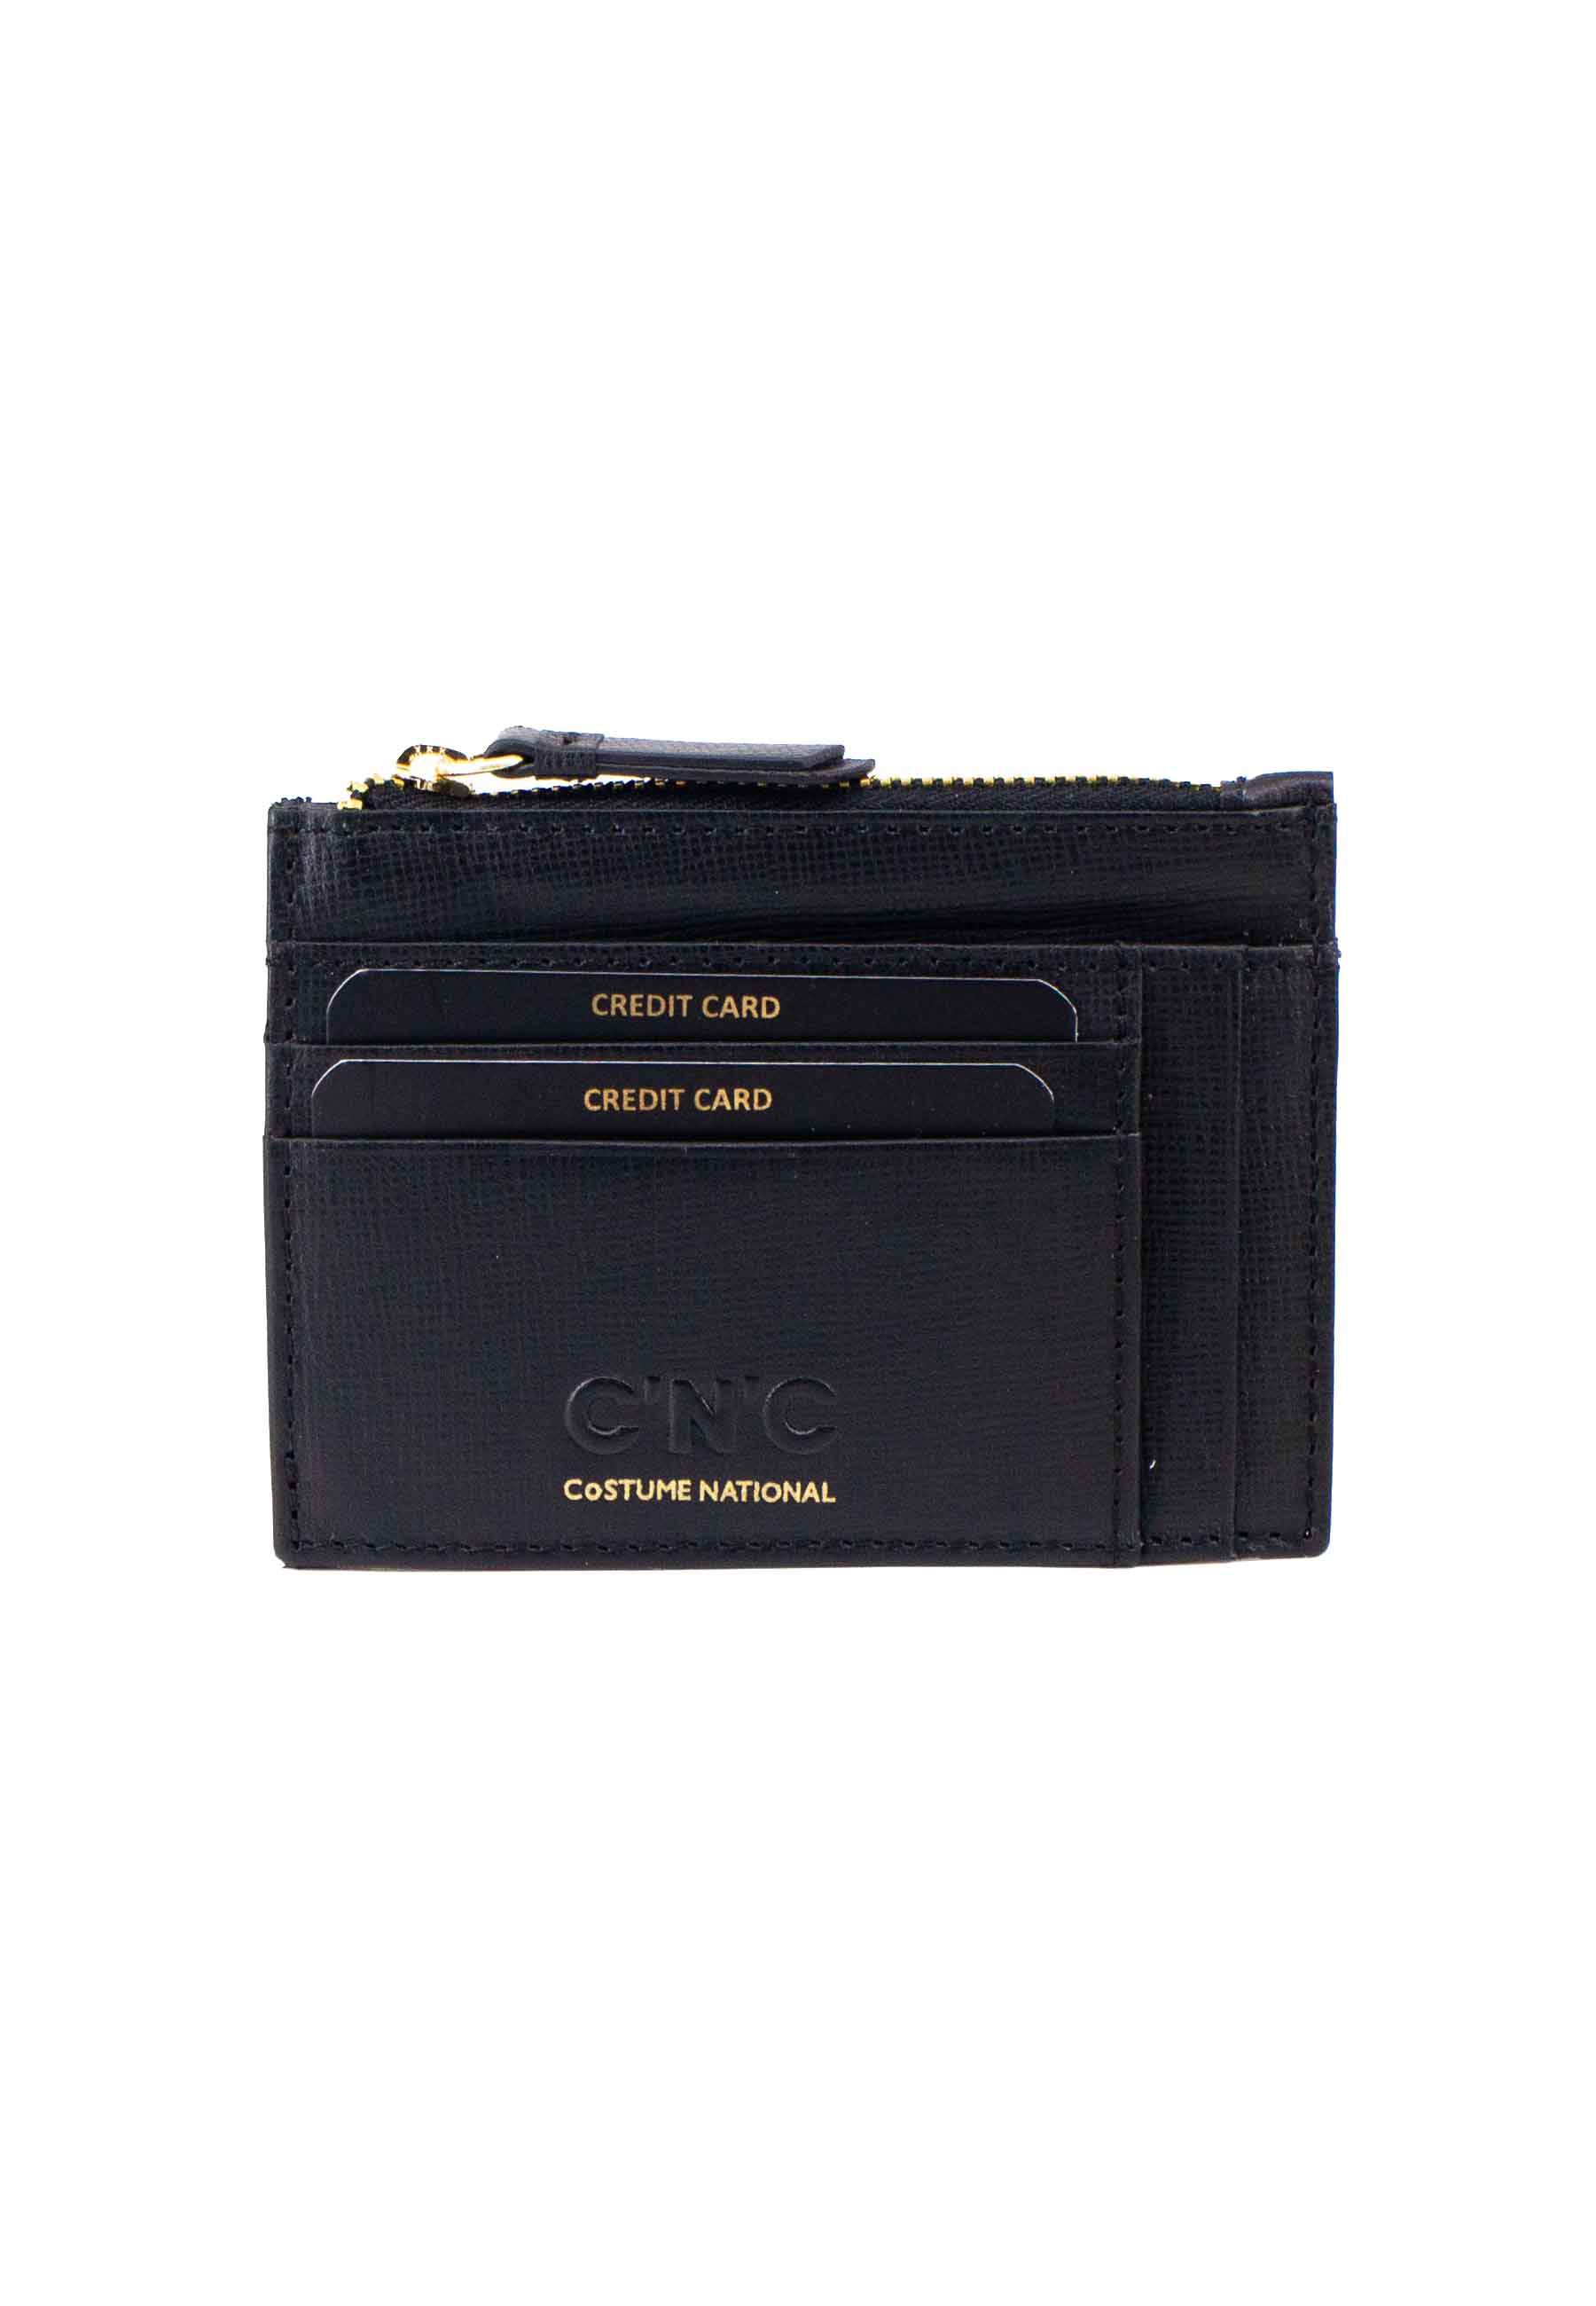 Men's zipped wallet in black saffiano leather